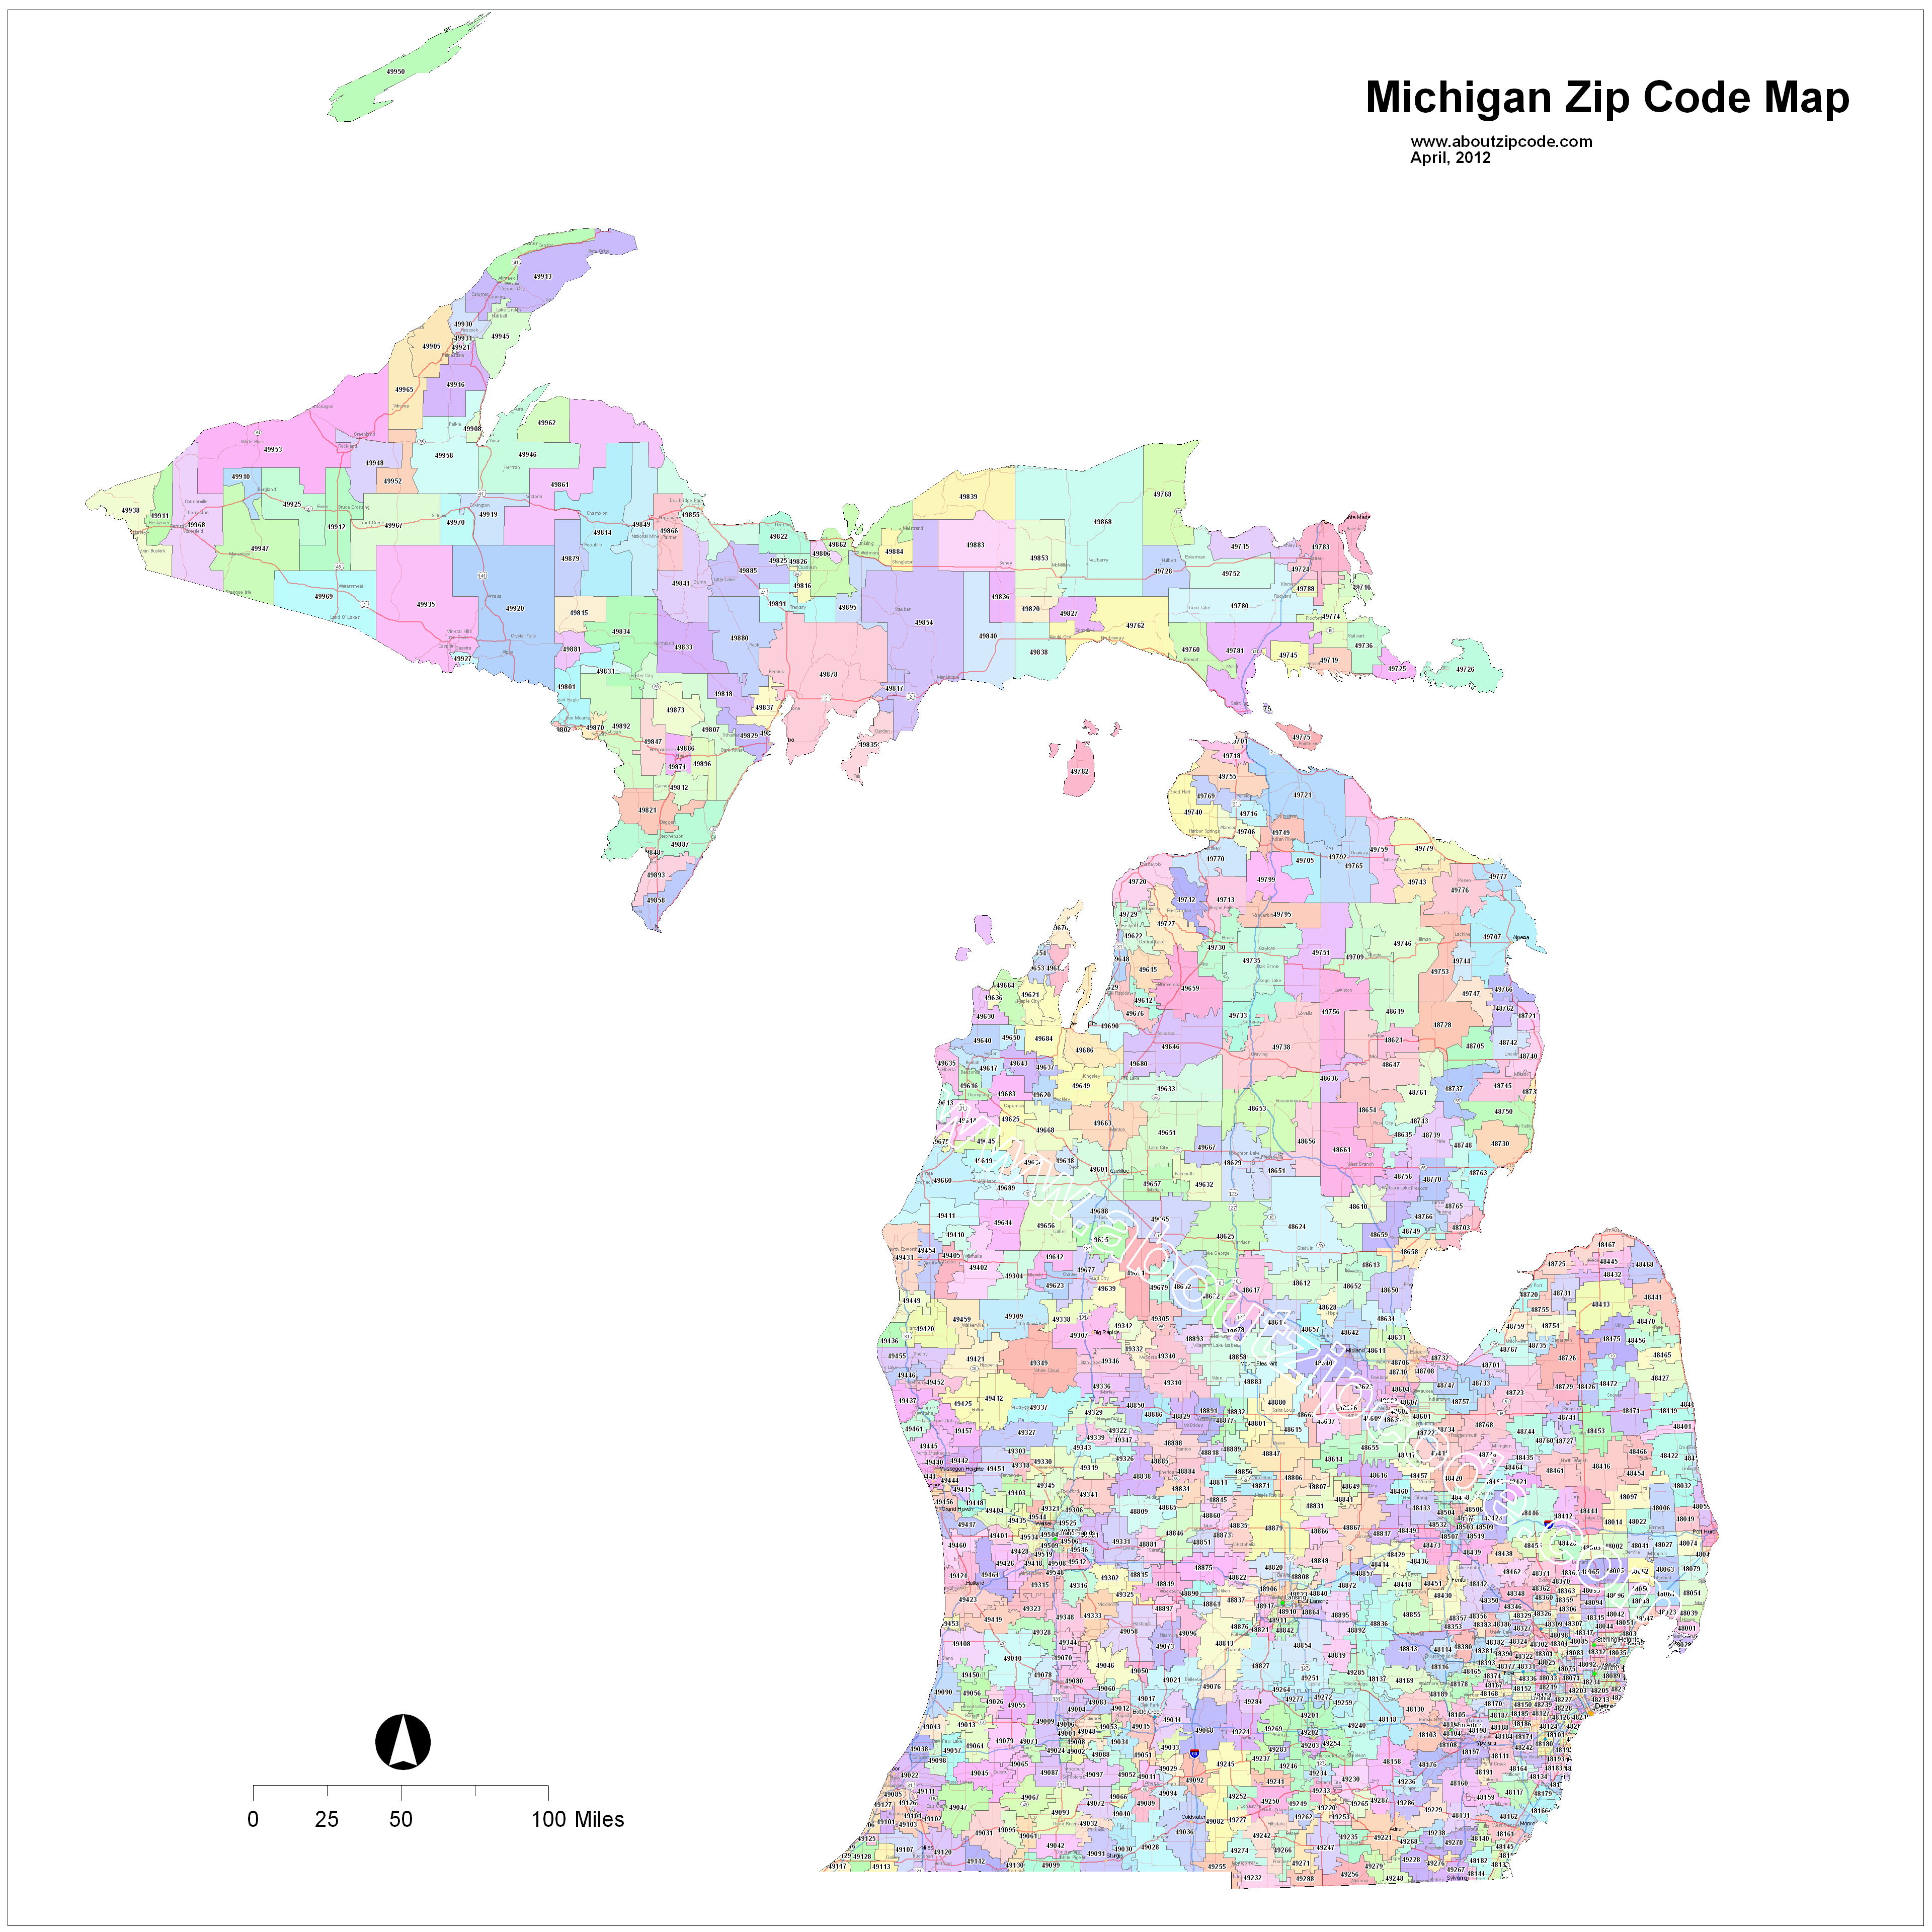 Michigan Zip Code Maps Free Michigan Zip Code Maps